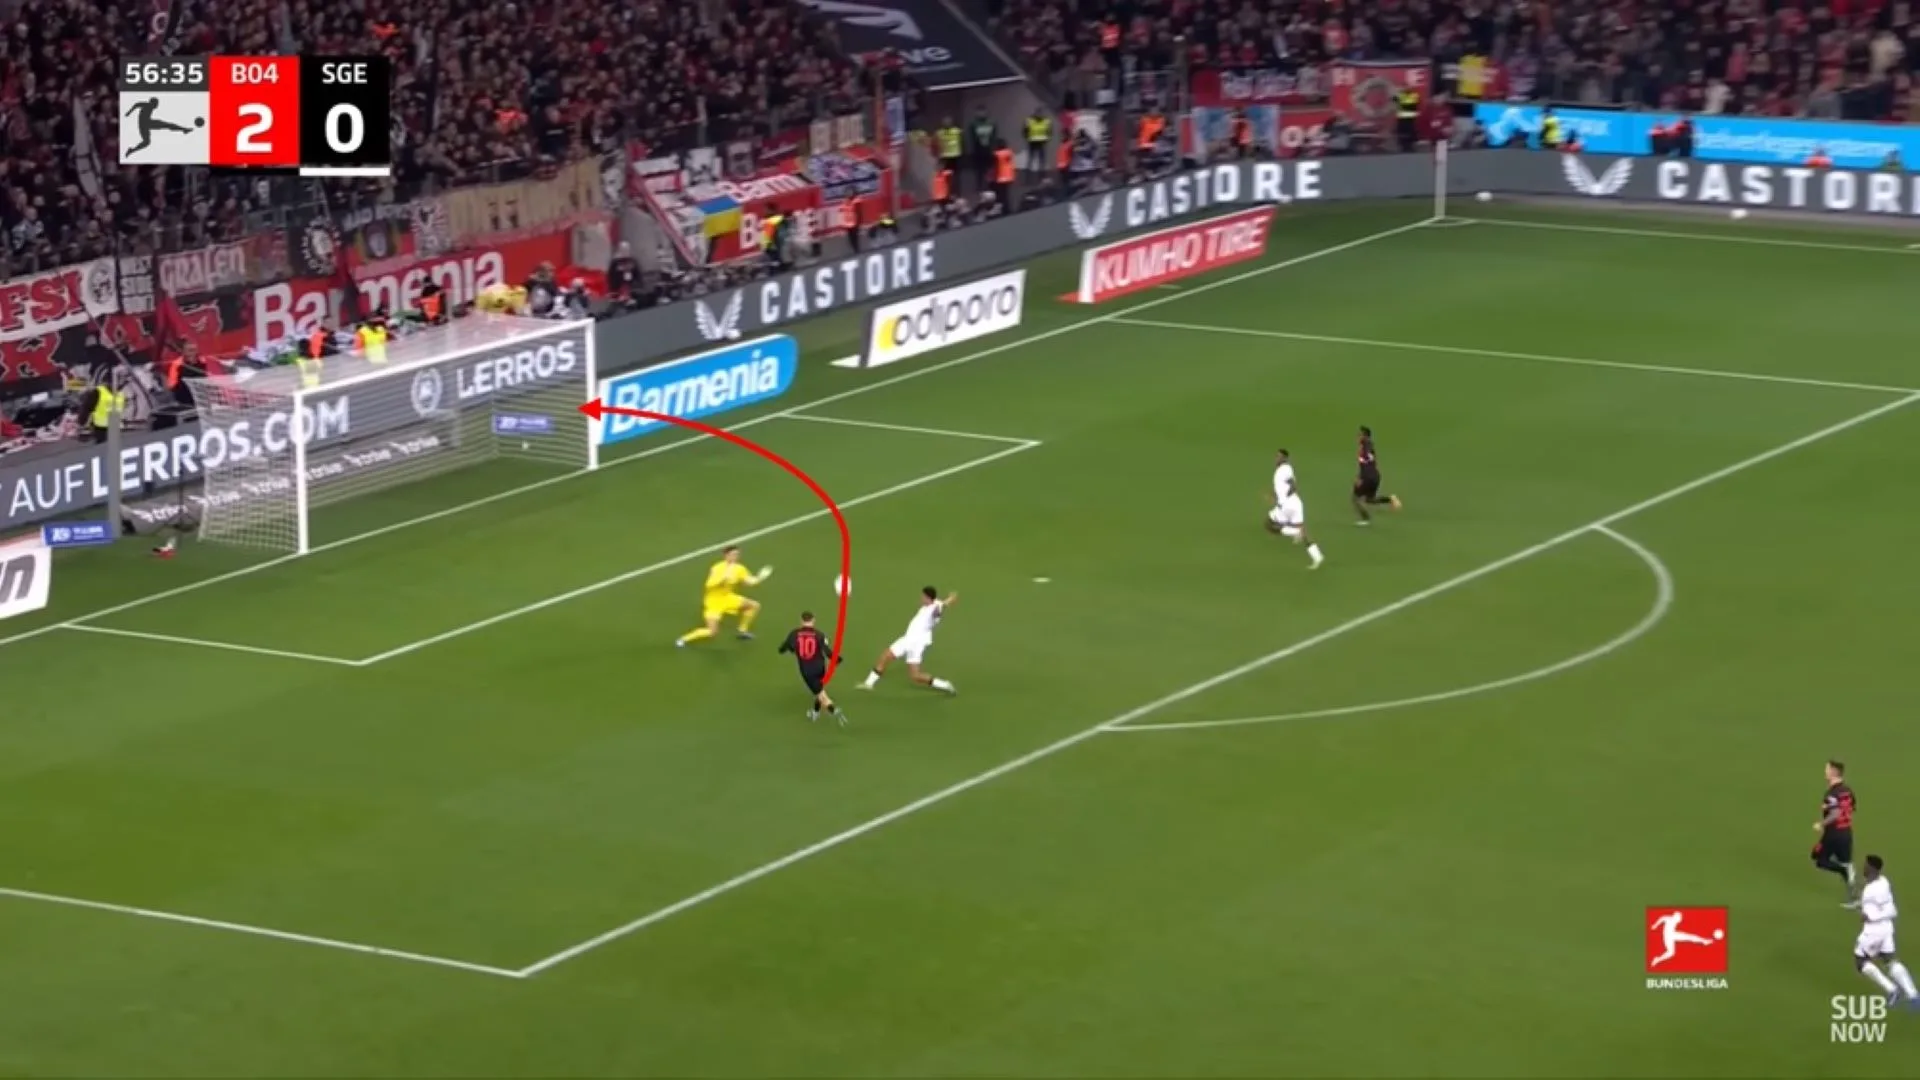 Goal created by Leverkusen